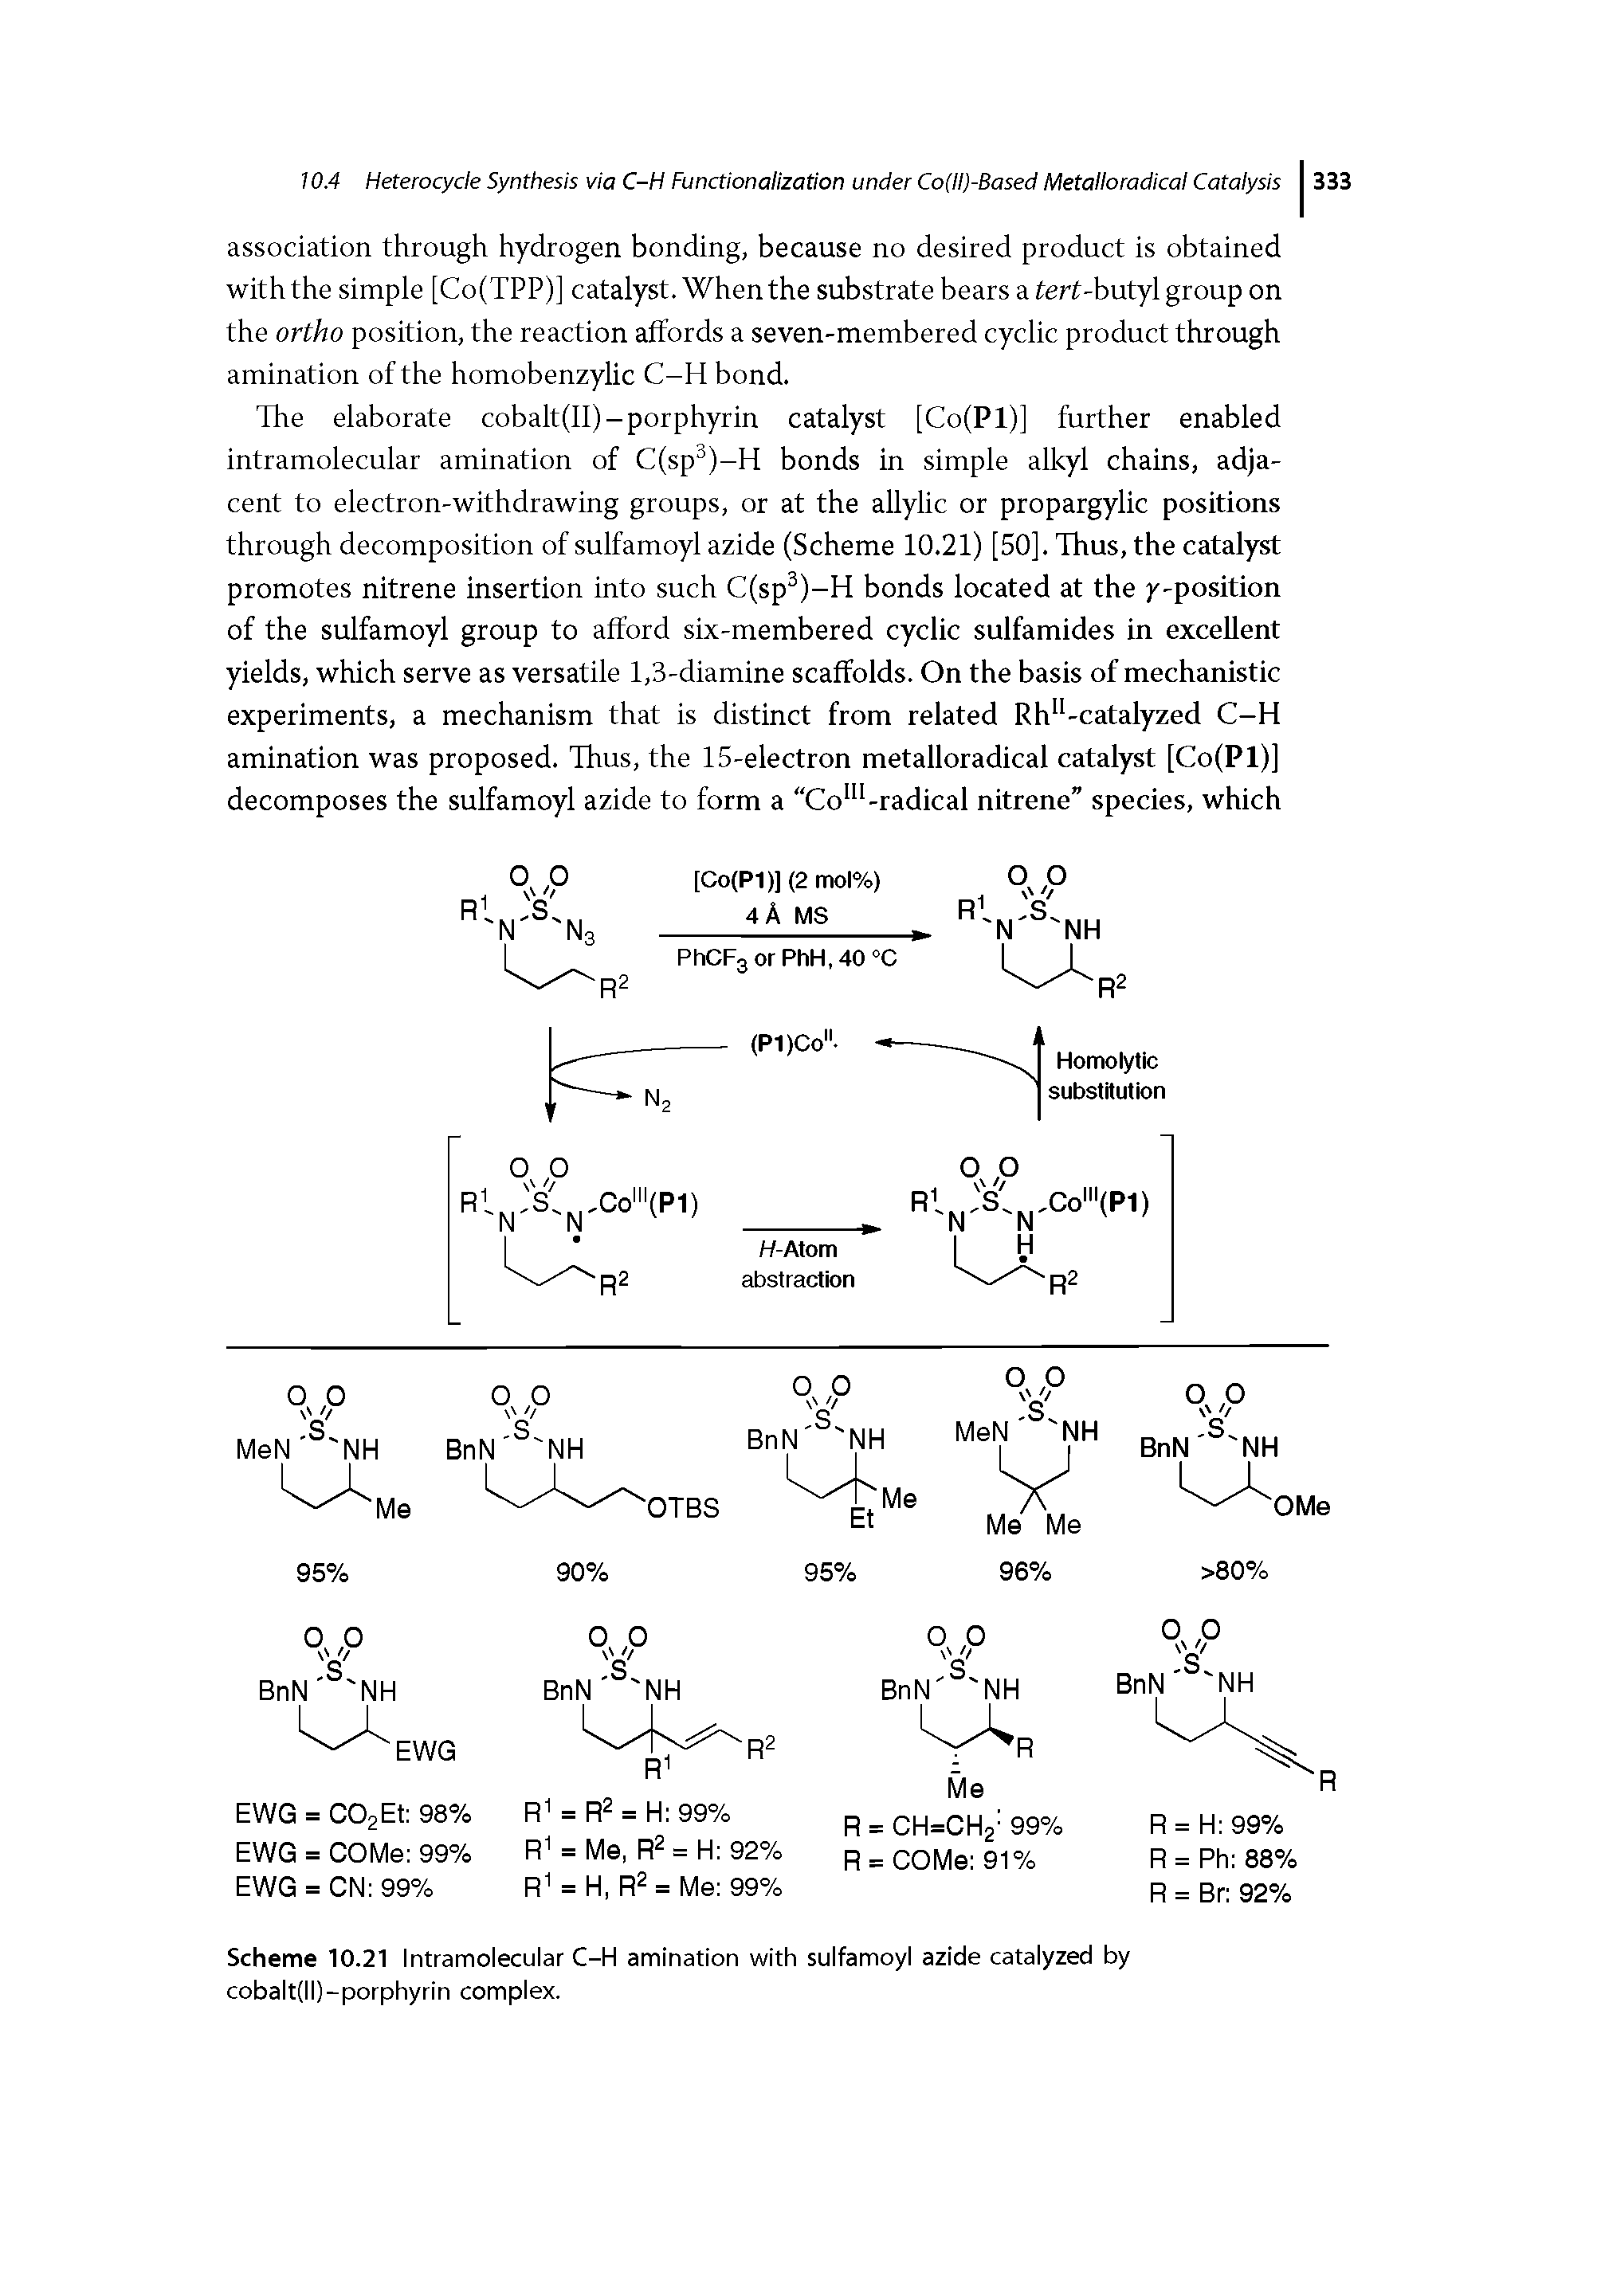 Scheme 10.21 Intramolecular C-H amination with sulfamoyl azide catalyzed by cobalt(ll)-porphyrin complex.